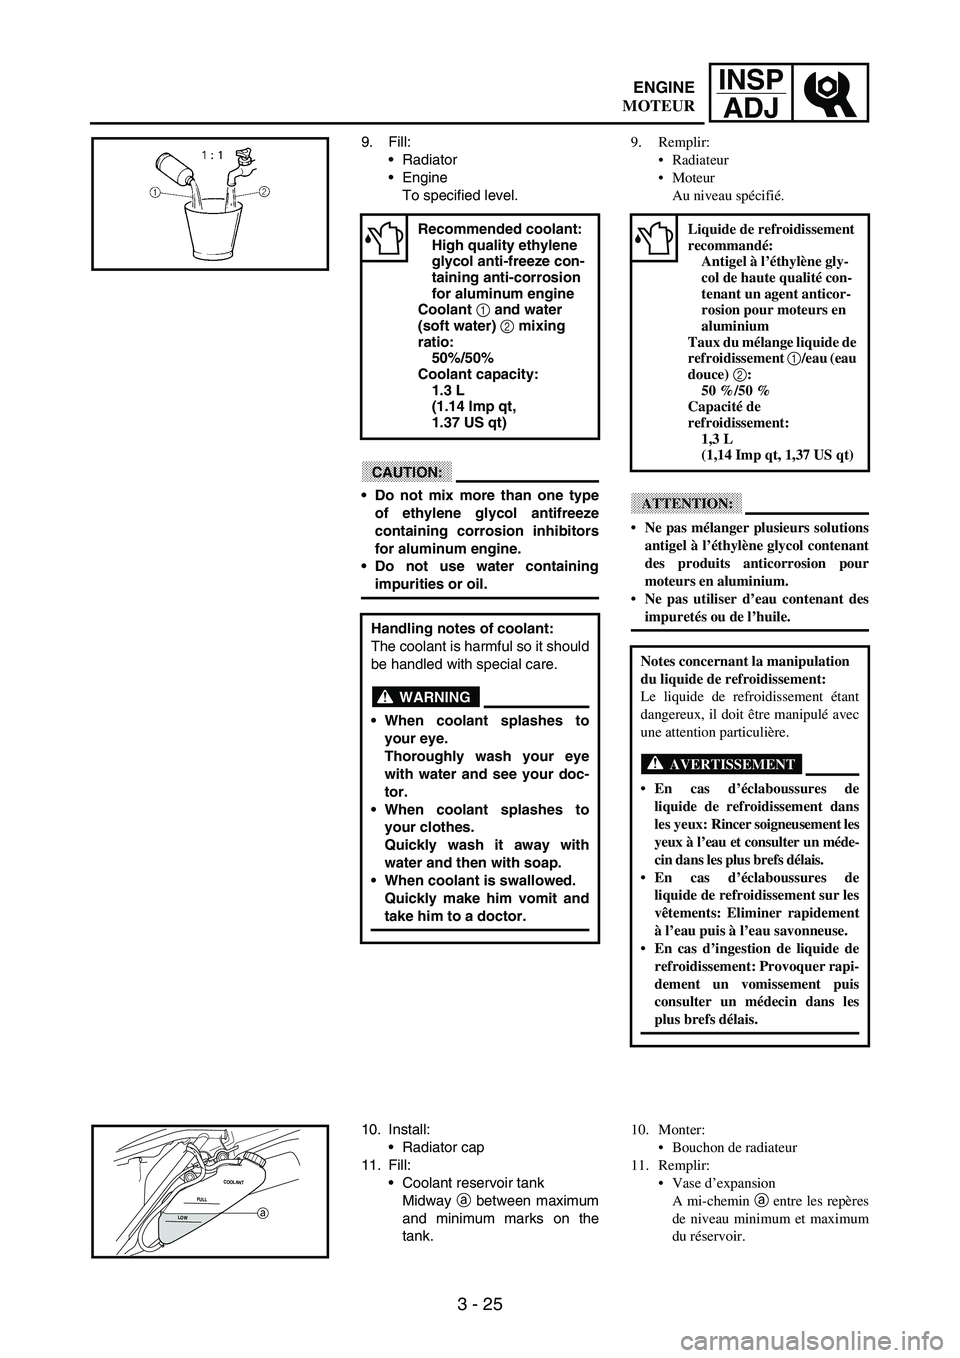 YAMAHA WR 250F 2003  Manuale duso (in Italian) 3 - 25
INSP
ADJ
9. Fill:
Radiator
Engine
To specified level.
CAUTION:
Do not mix more than one type
of ethylene glycol antifreeze
containing corrosion inhibitors
for aluminum engine.
Do not use wa